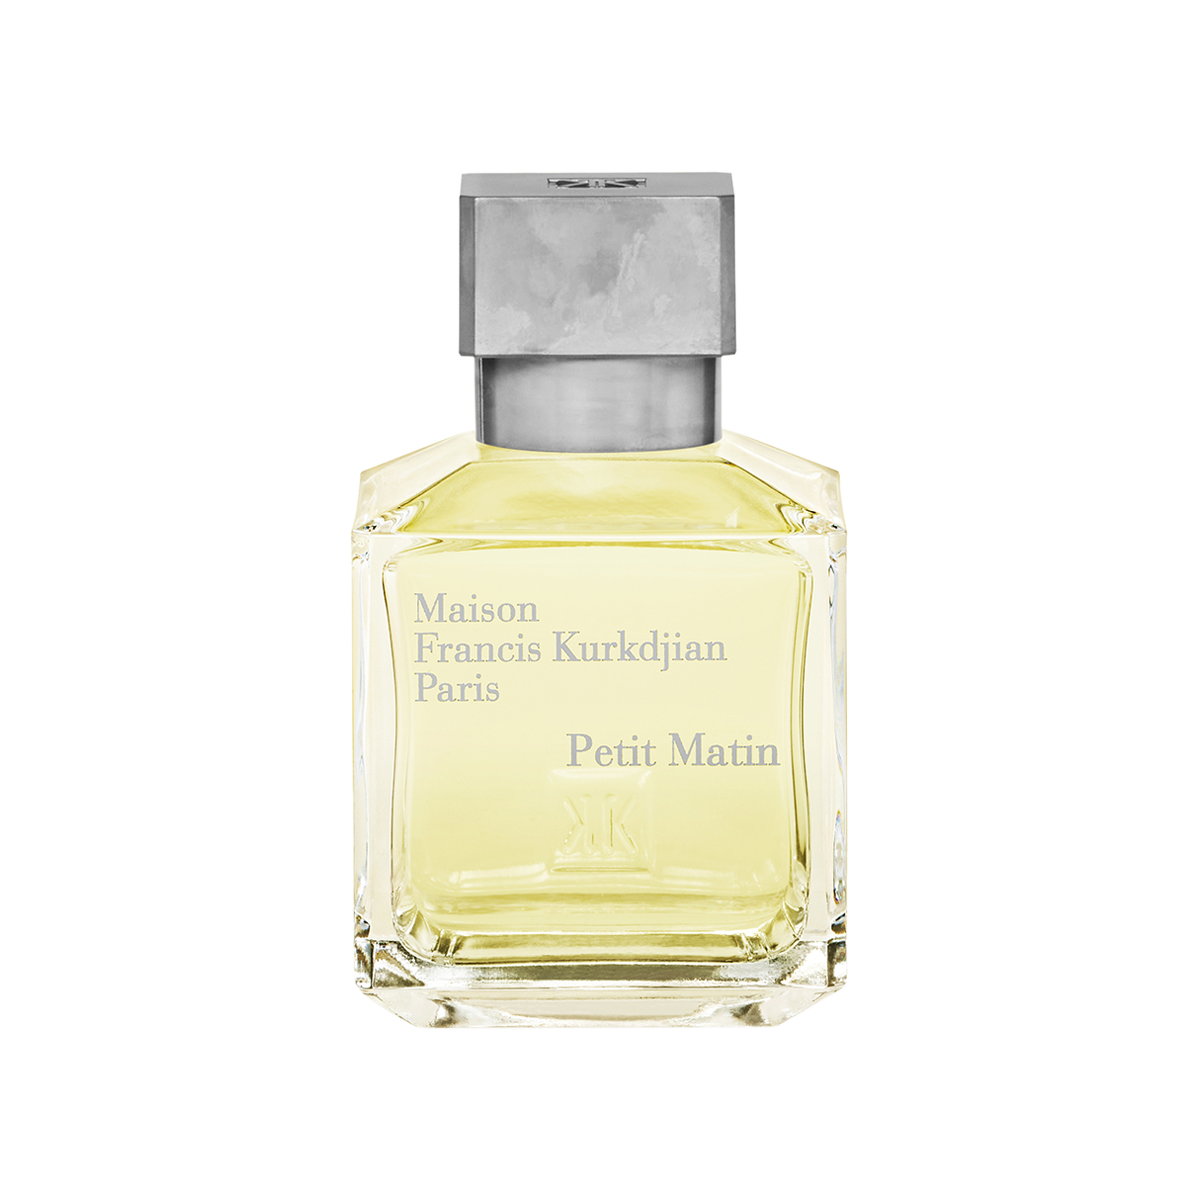 Maison Francis Kurkdjian - Petit Matin Eau de Parfum